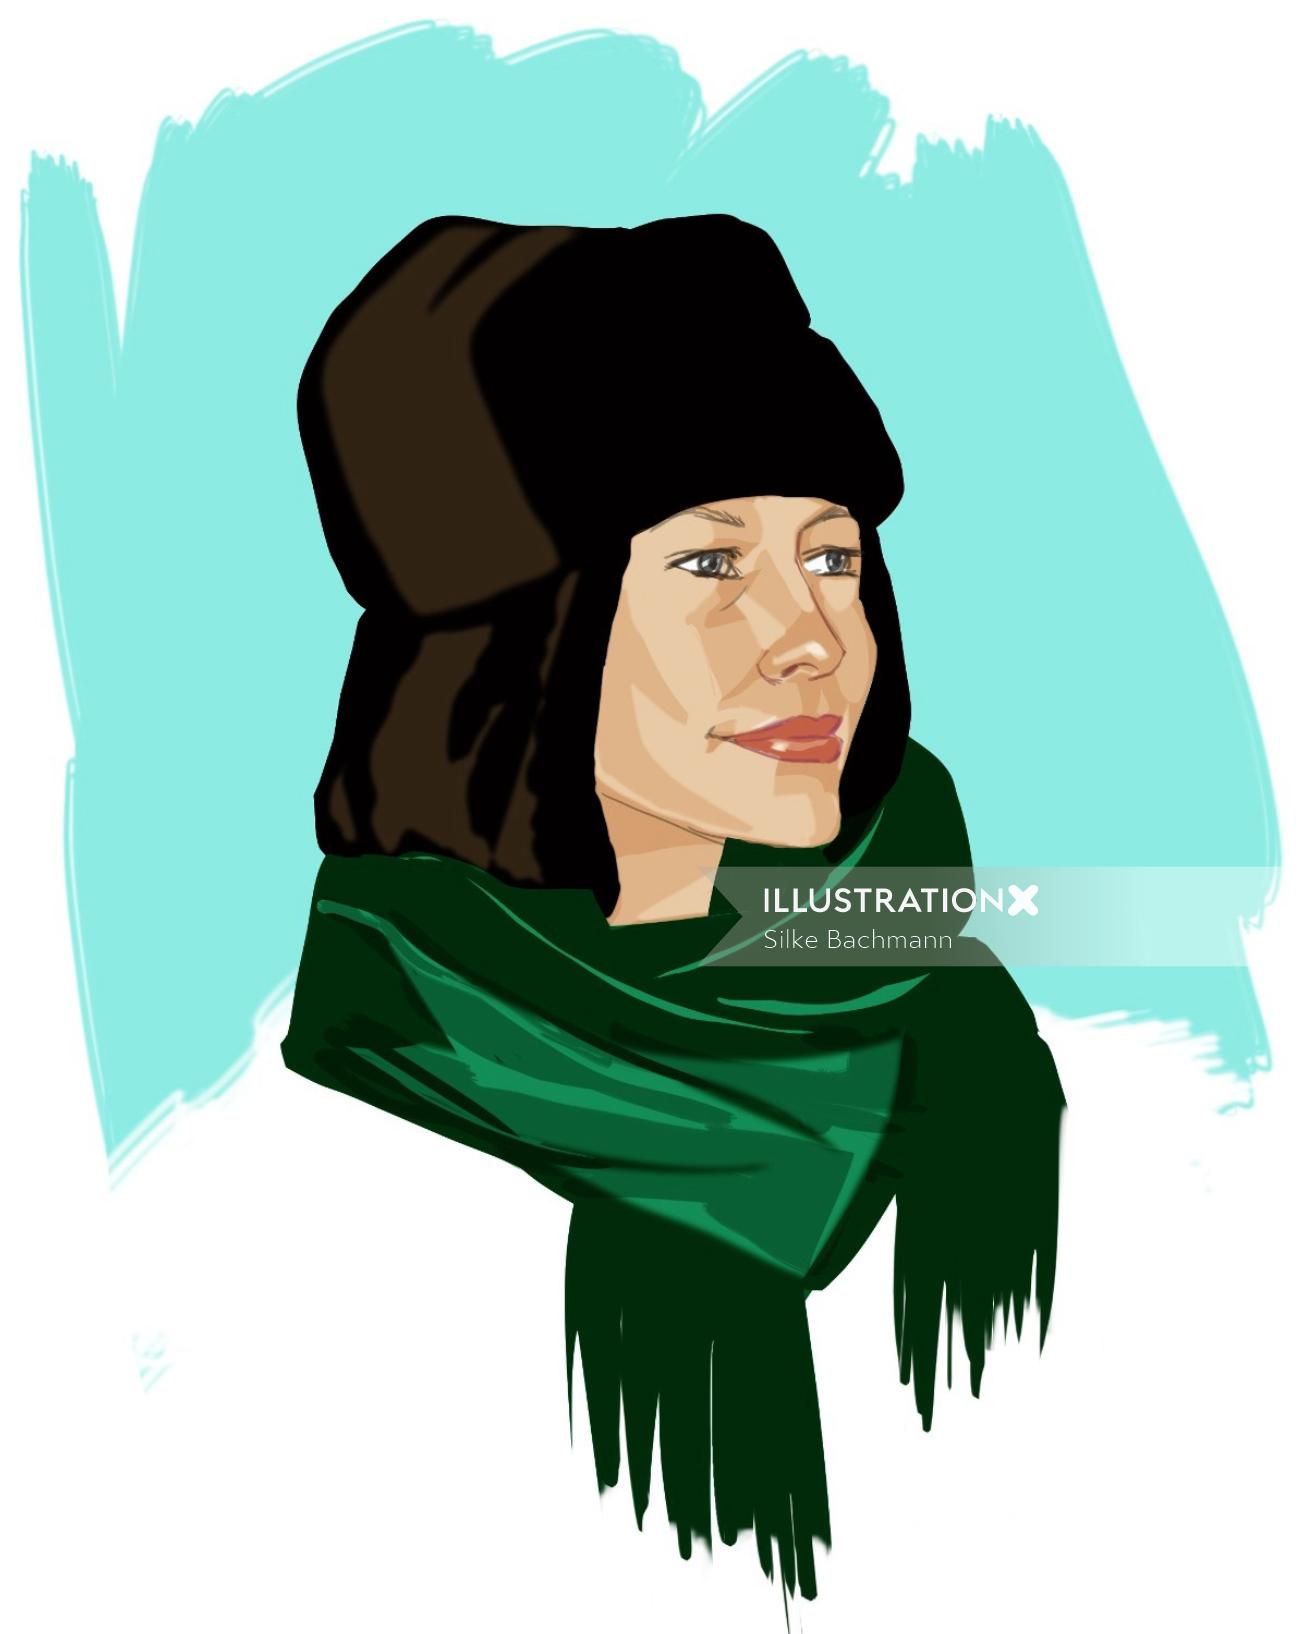 Women scarf fashion - An illustration by Silke Bachmann